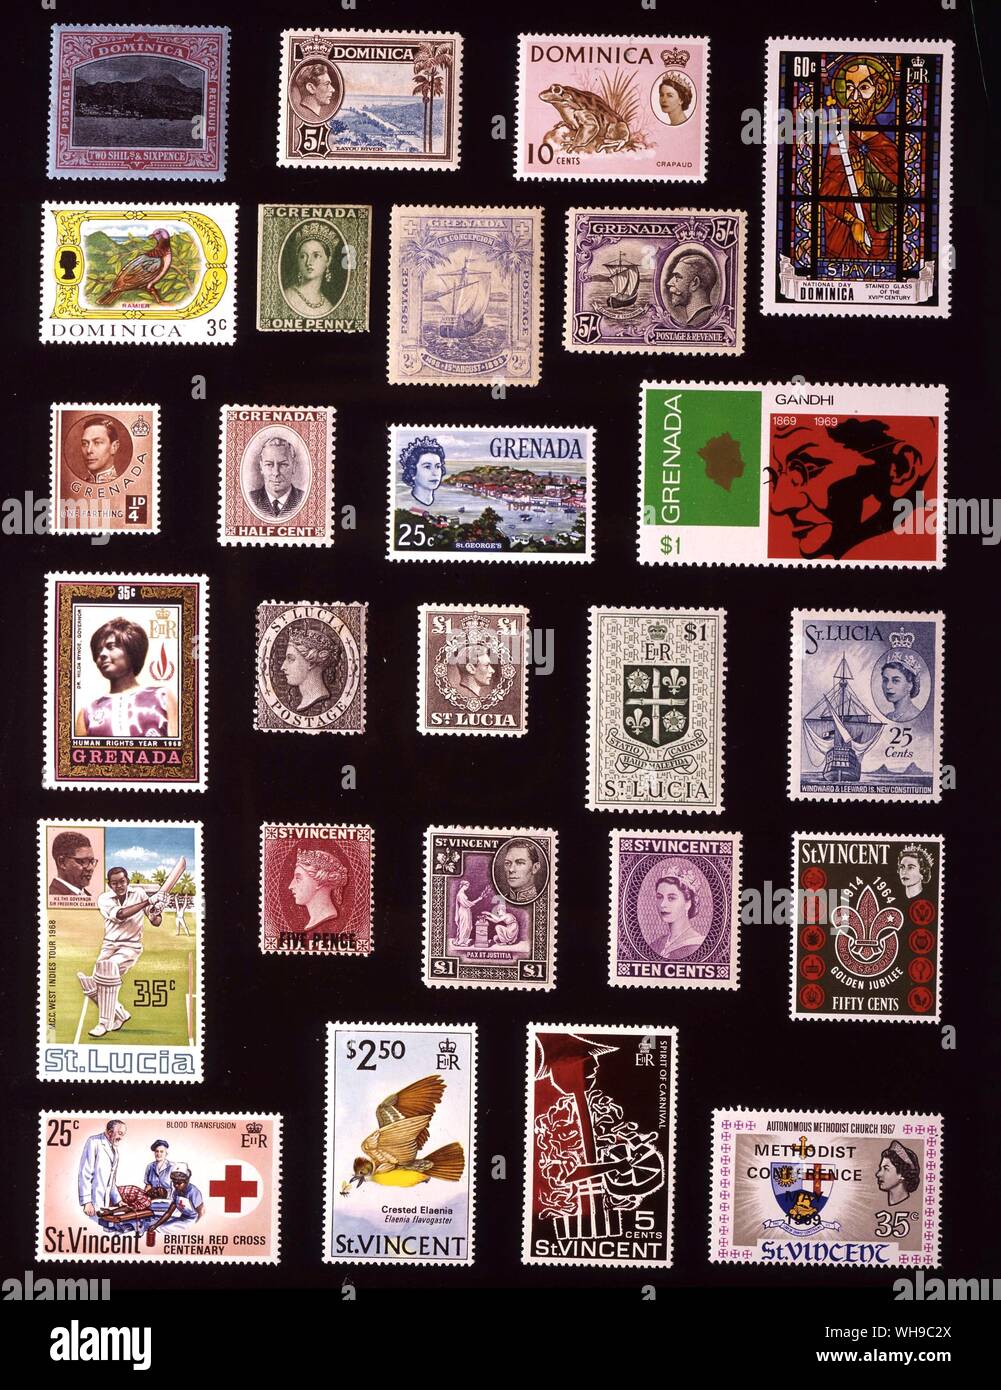 AMERICA - WINWARD ISLANDS: (left to right) 1. Dominica, 2 shillings 6 pence, 1921, 2. Dominica, 5 shillings, 1938, 3. Dominica, 10 cents, 1963, 4. Dominica, 60 cents, 1969, 5. Dominica, 3 cents, 1969, 6. Grenada, 1 penny, 1861, 7. Grenada, 2.5 pence, 1898, 8. Grenada, 5 shillings, 1934, 9. Grenada, farthing, 1937, 10. Grenada, half cent, 1951, 11. Grenada, 25 cents, 1966, 12. Grenada, 1 dollar, 1969, 13. Grenada, 35 cents, 1969, 14. St Lucia, 1 penny, 1864, 15. St Lucia, 1 pound, 1946, 16. St Lucia, 1 dollar, 1953, 17. St Lucia, 25 cents, 18. St Lucia, 35 cents, 1968, 19. St Vincent, 5 pence, Stock Photo